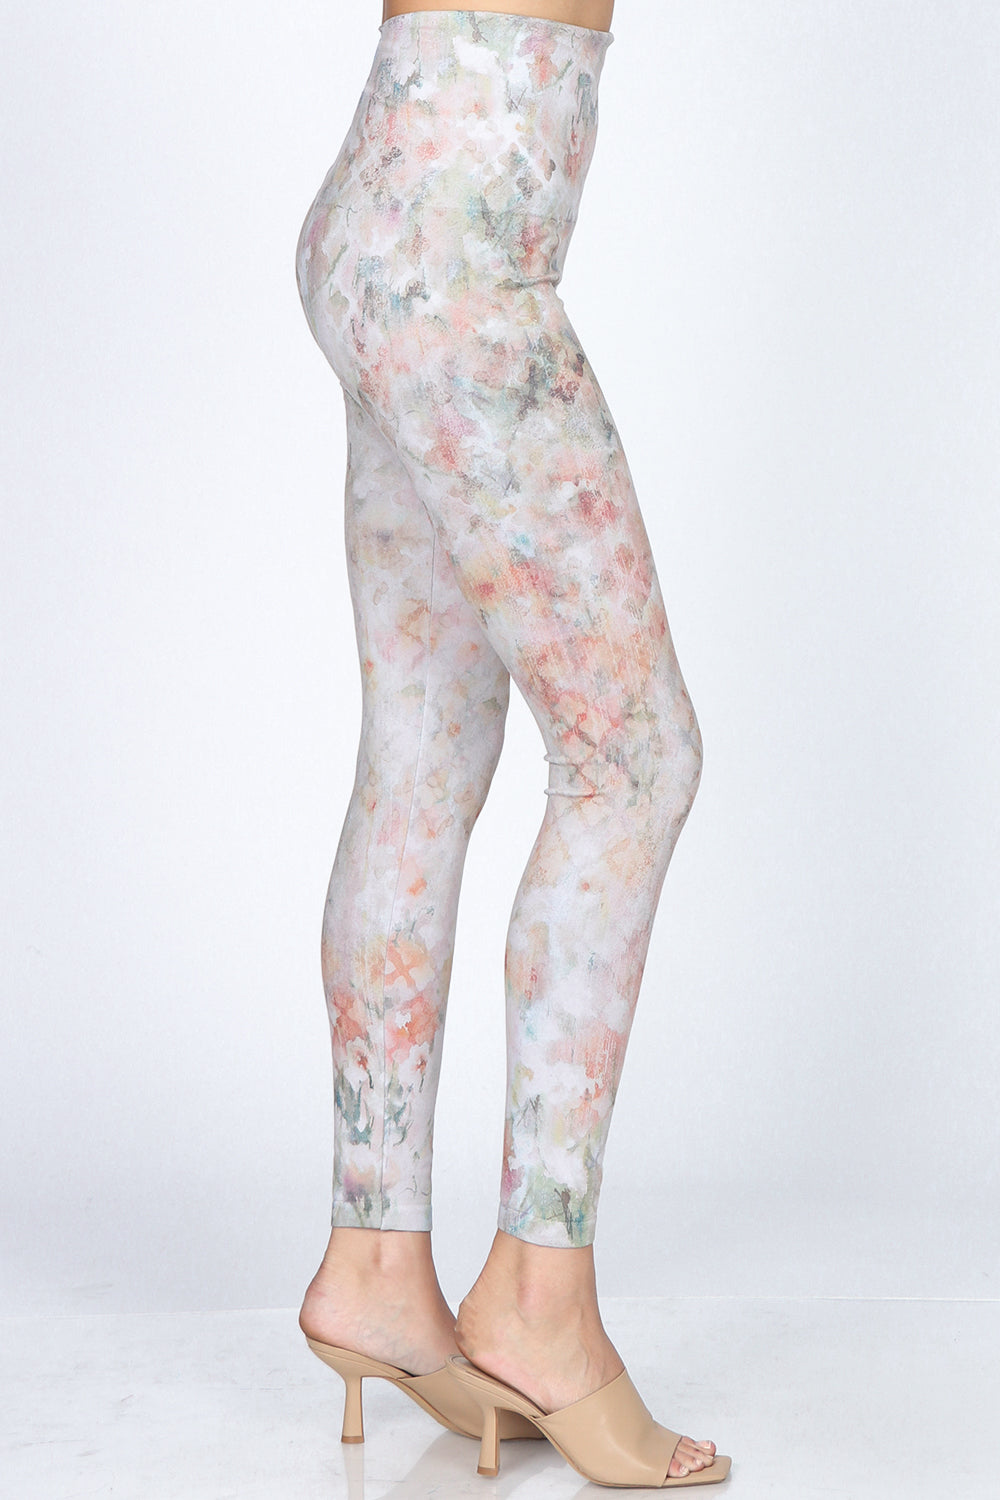 Monet Floral Leggings